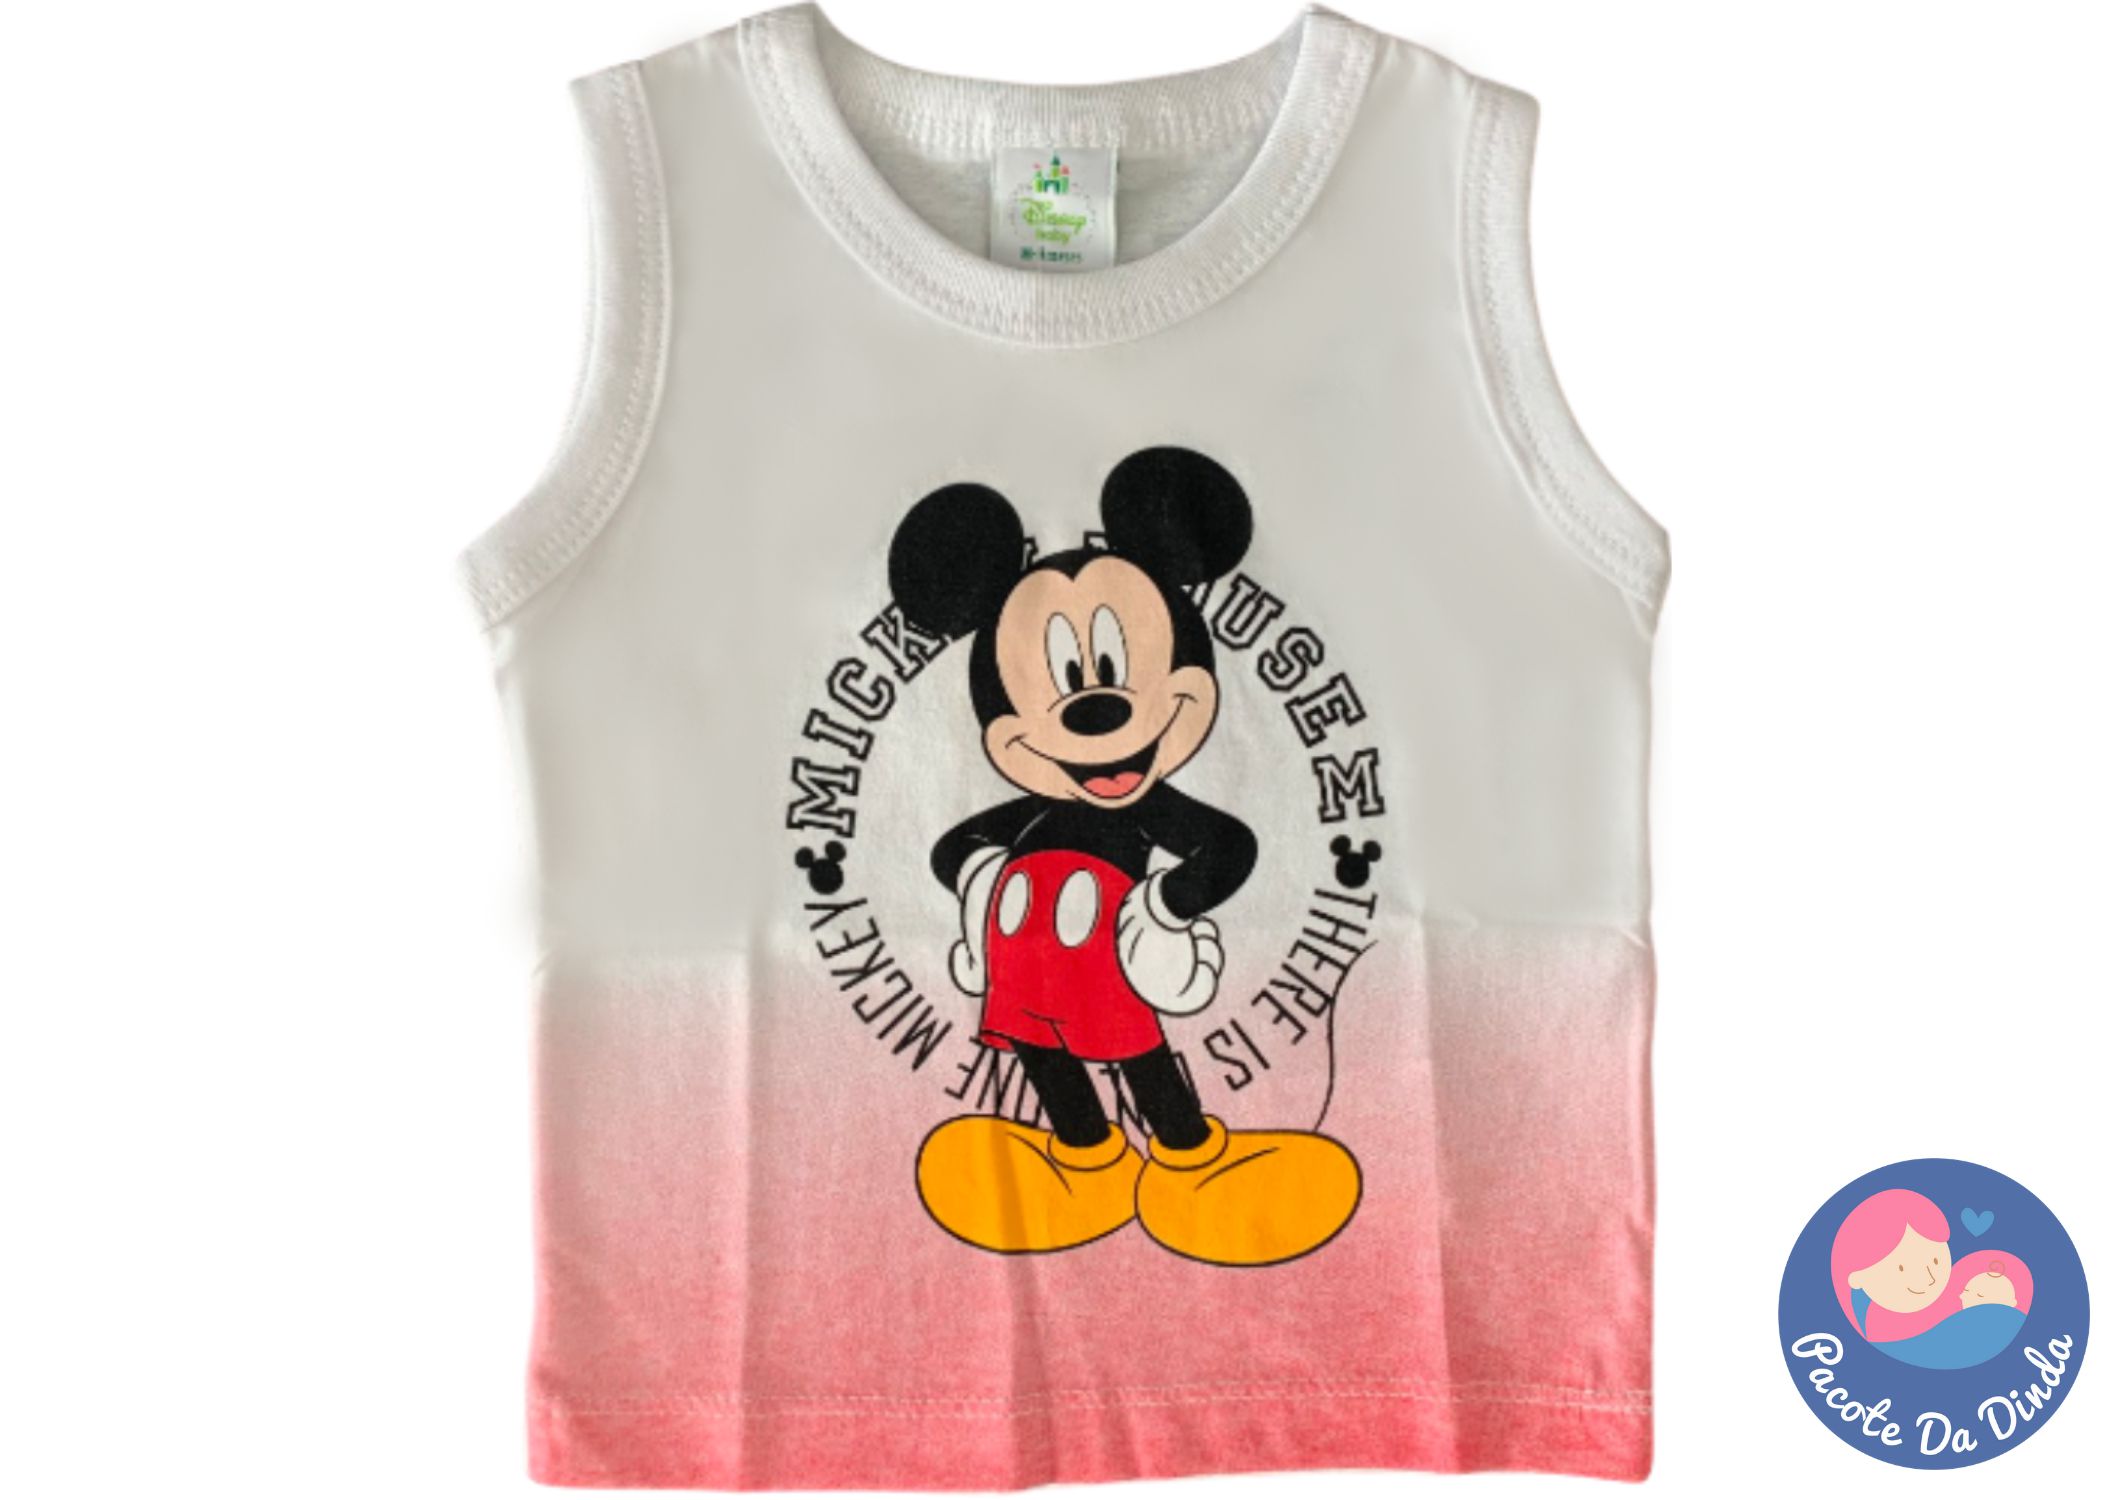 Blusa Regata Mickey Branca - Produto Original Disney Baby - Loja Infantil -  Pacote da Dinda